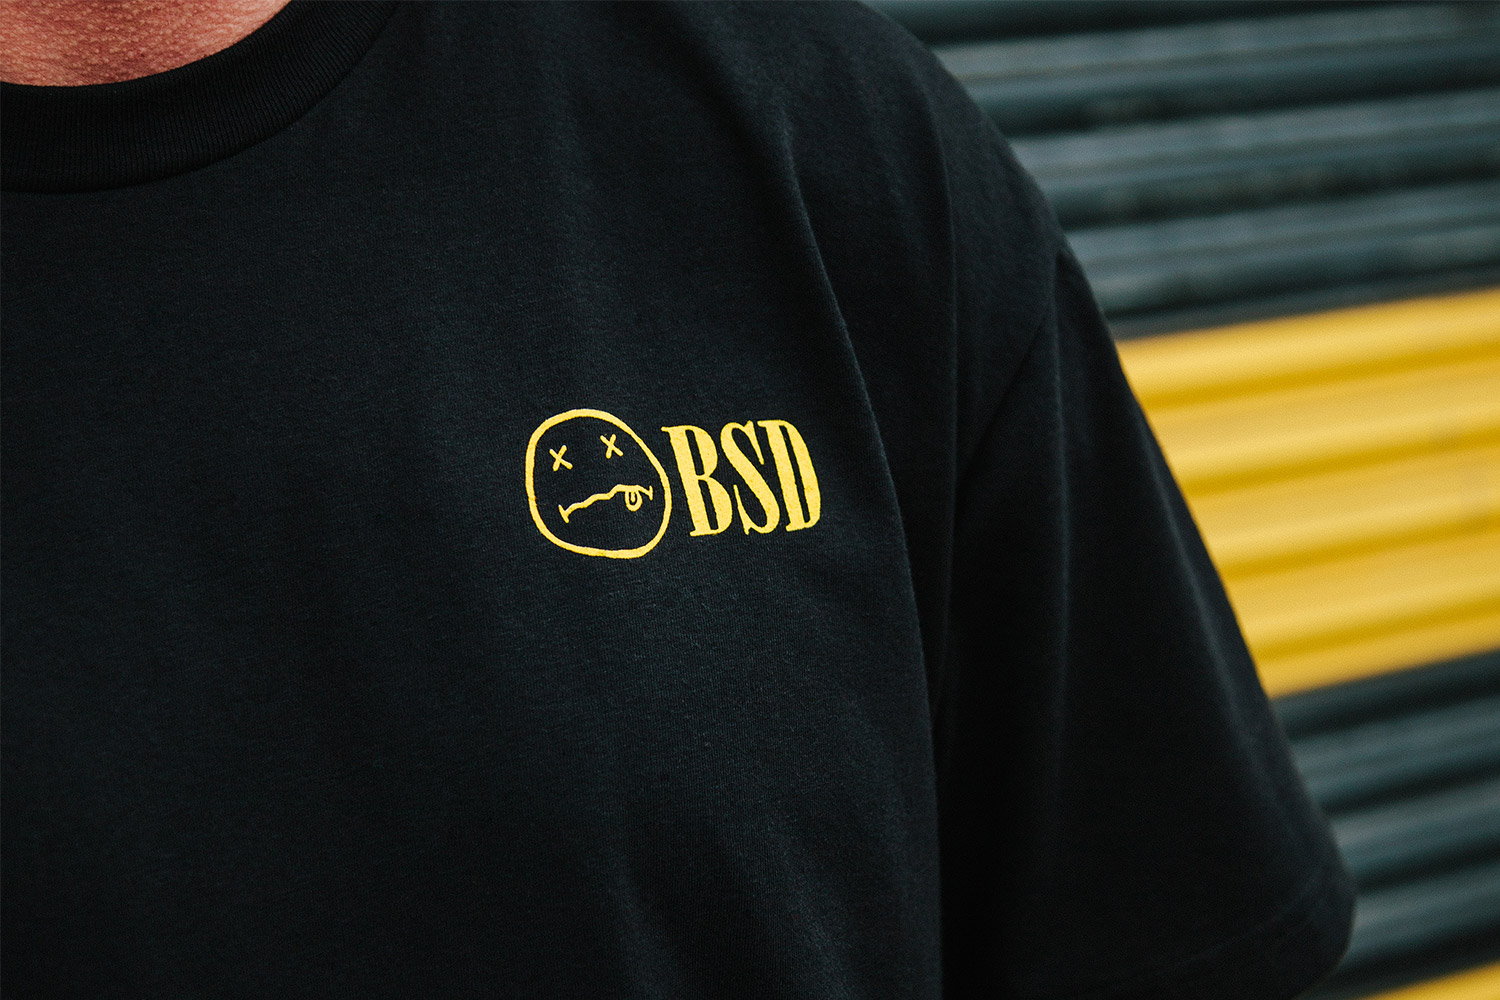 BSD 'Forevermind' T-shirt